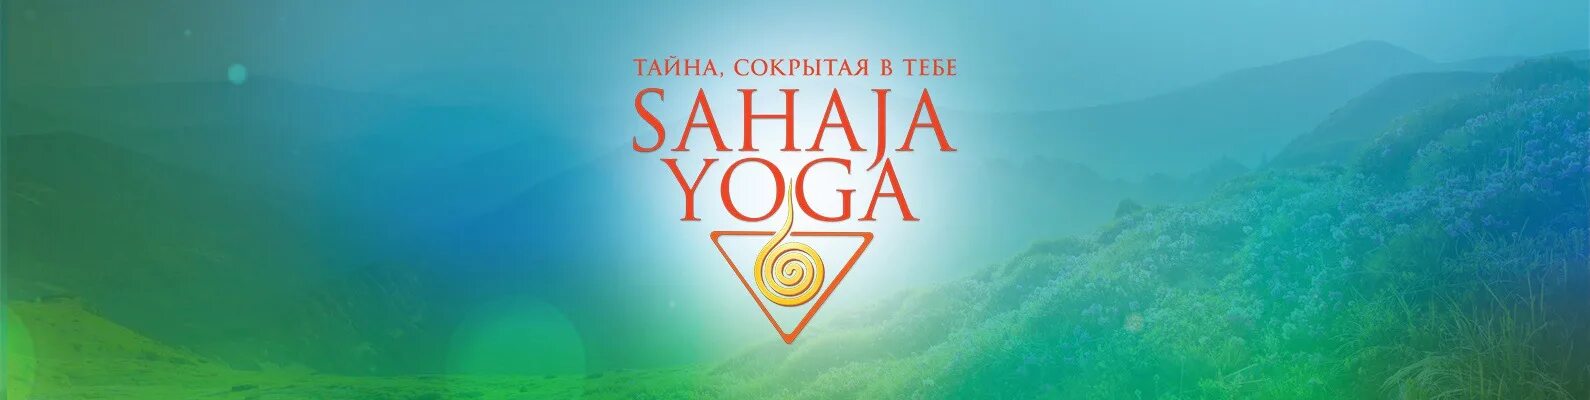 Секрет абакан. Символы Сахаджа йоги. Методы Сахаджа йоги. Сахаджа йога в городе Саратов логотип. Сахаджа йога схема дачи самореализации.